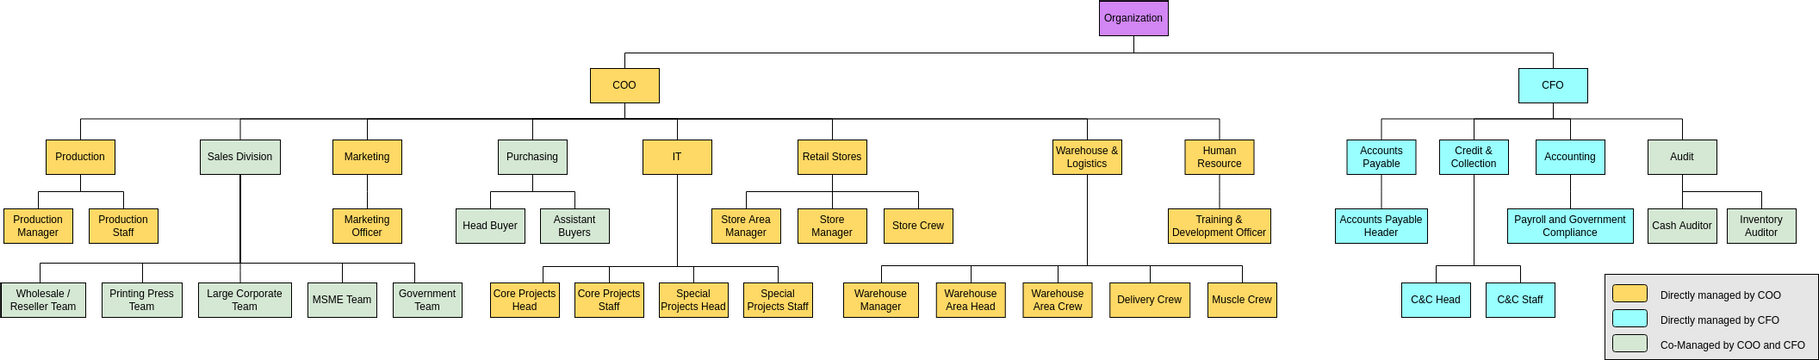 Organization Chart template: Organization Chart with Color Legend (Created by InfoART's Organization Chart marker)